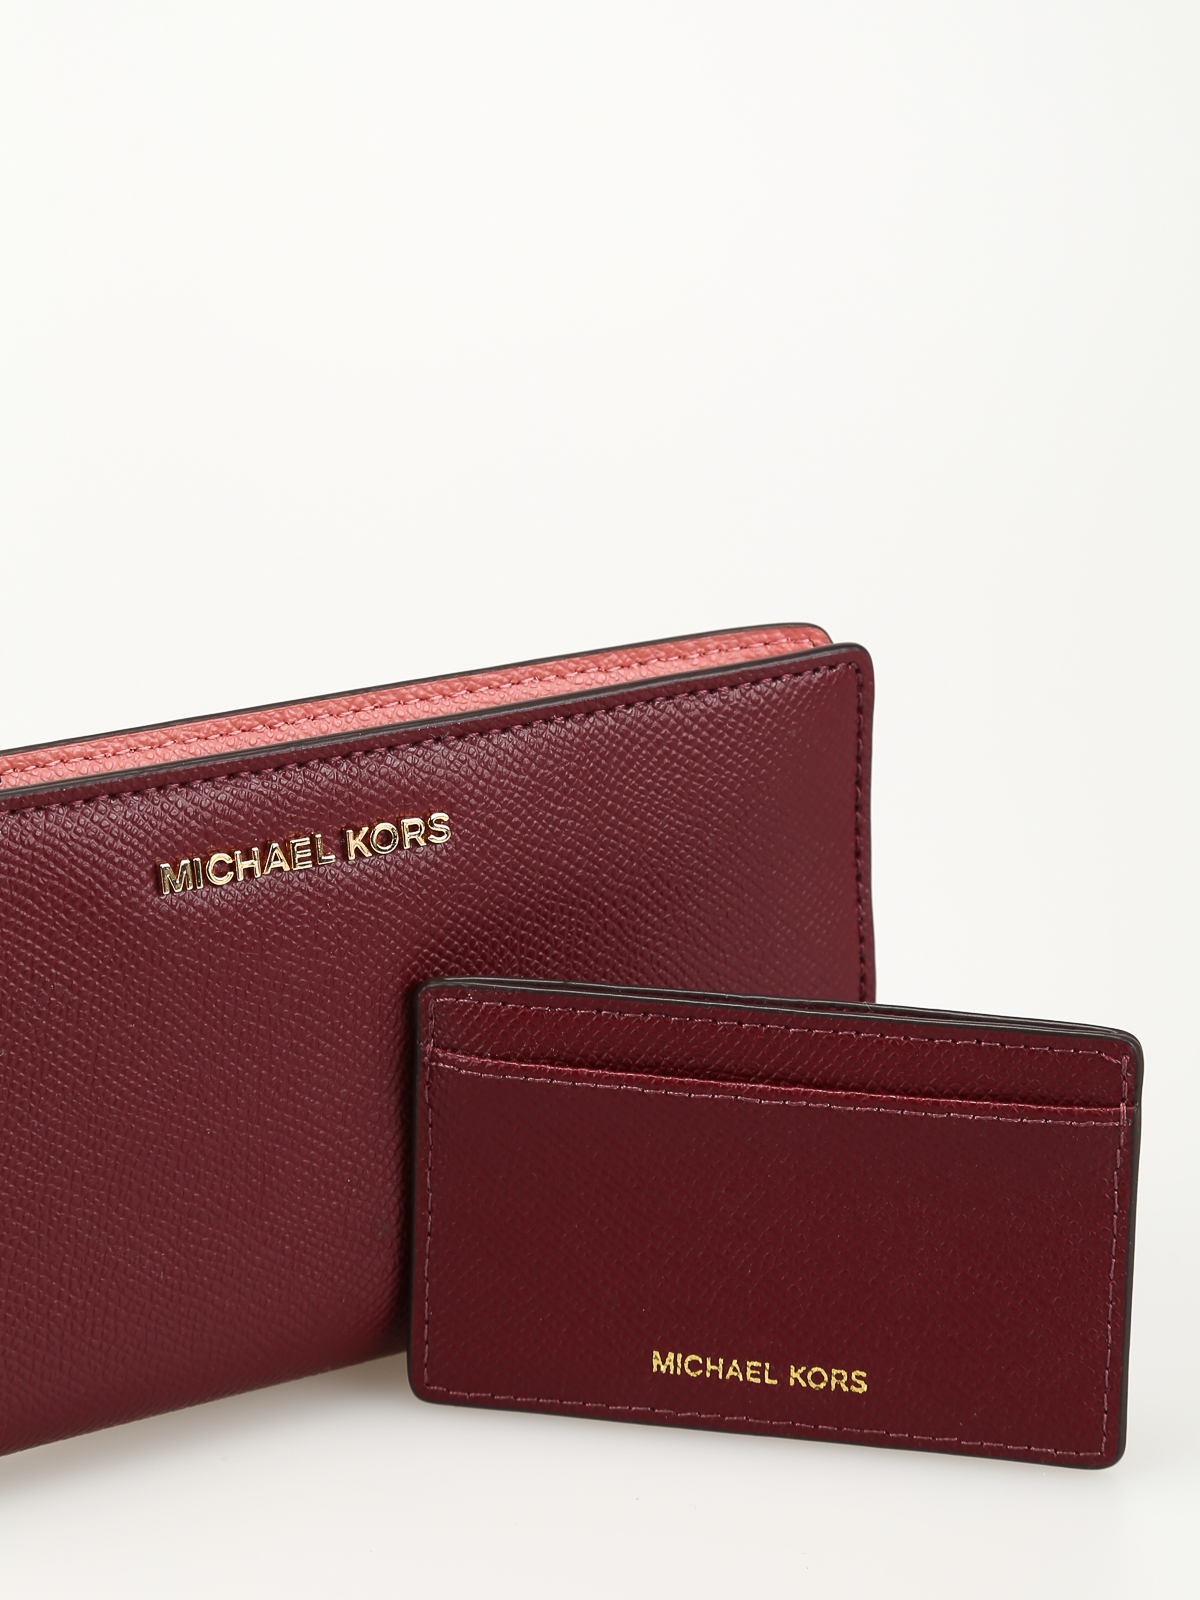 michael kors card holder wallet